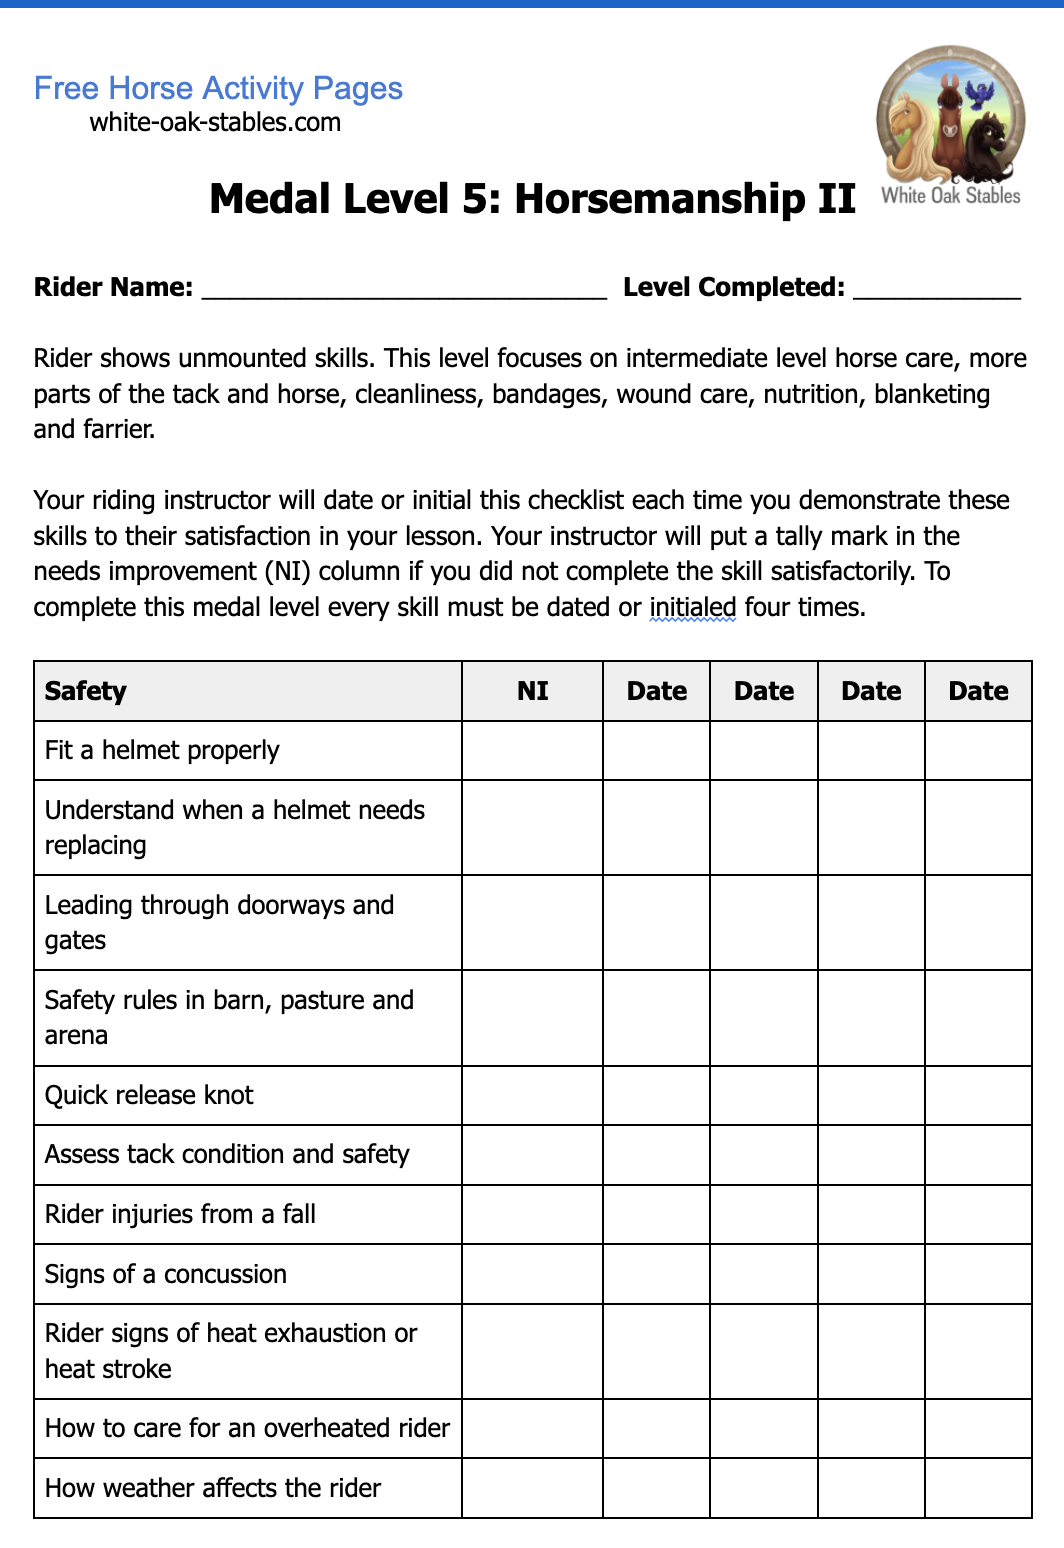 Rider Medals – Level 5: Horsemanship II Checklist